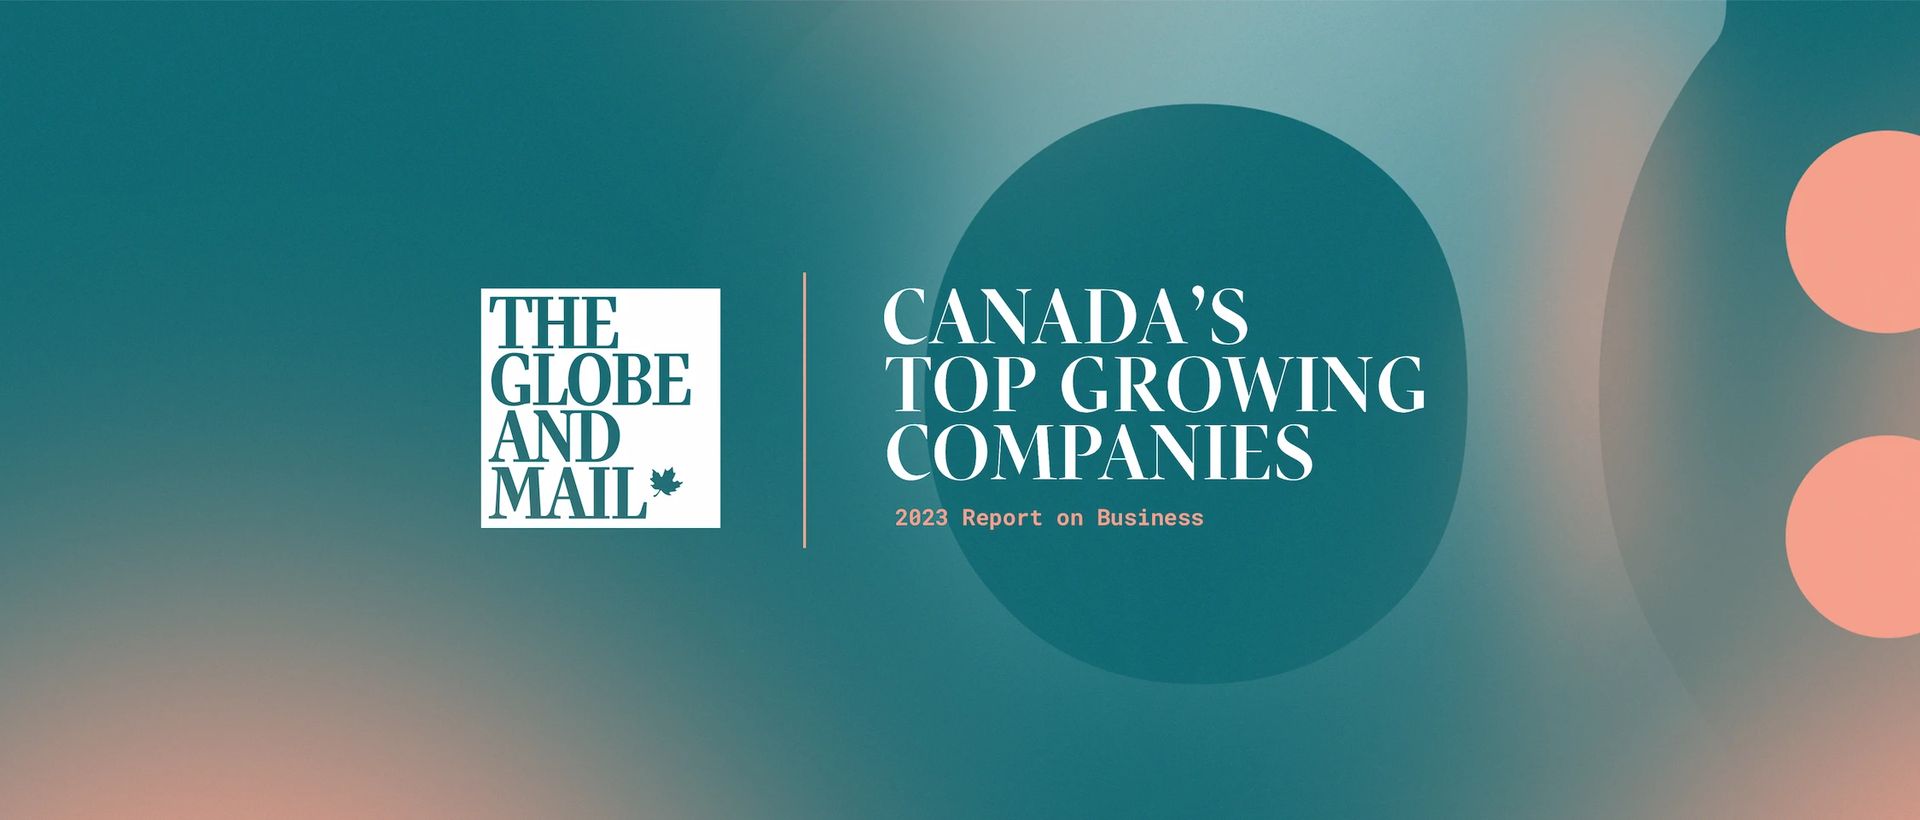 Logo du Globe and Mail et de Canada's Top Growing Companies